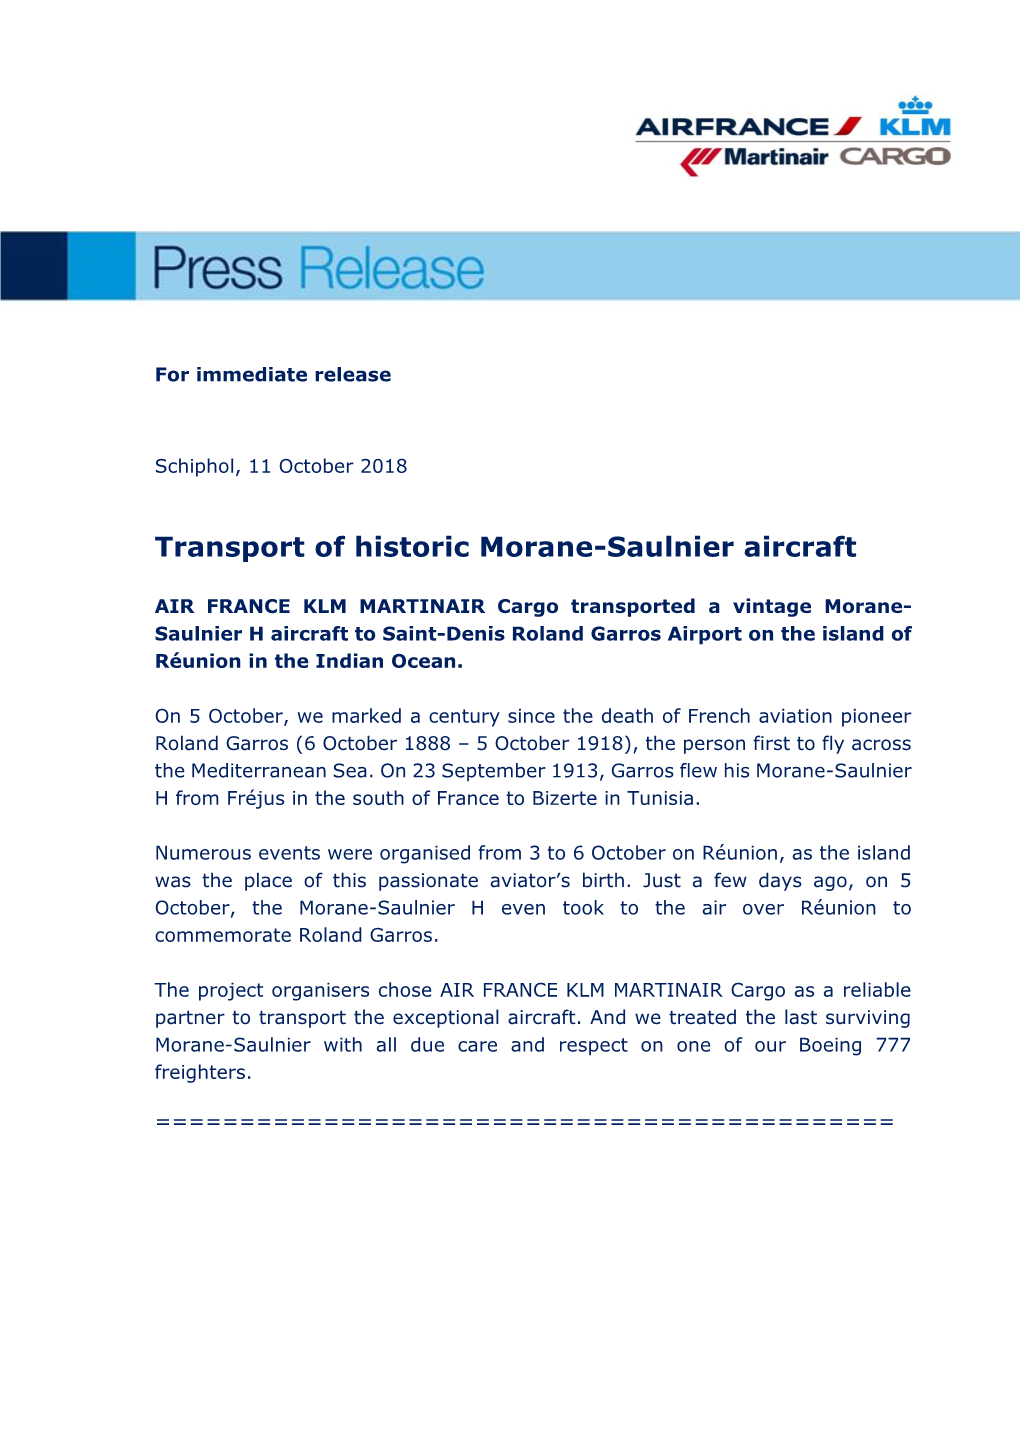 Transport of Historic Morane-Saulnier Aircraft